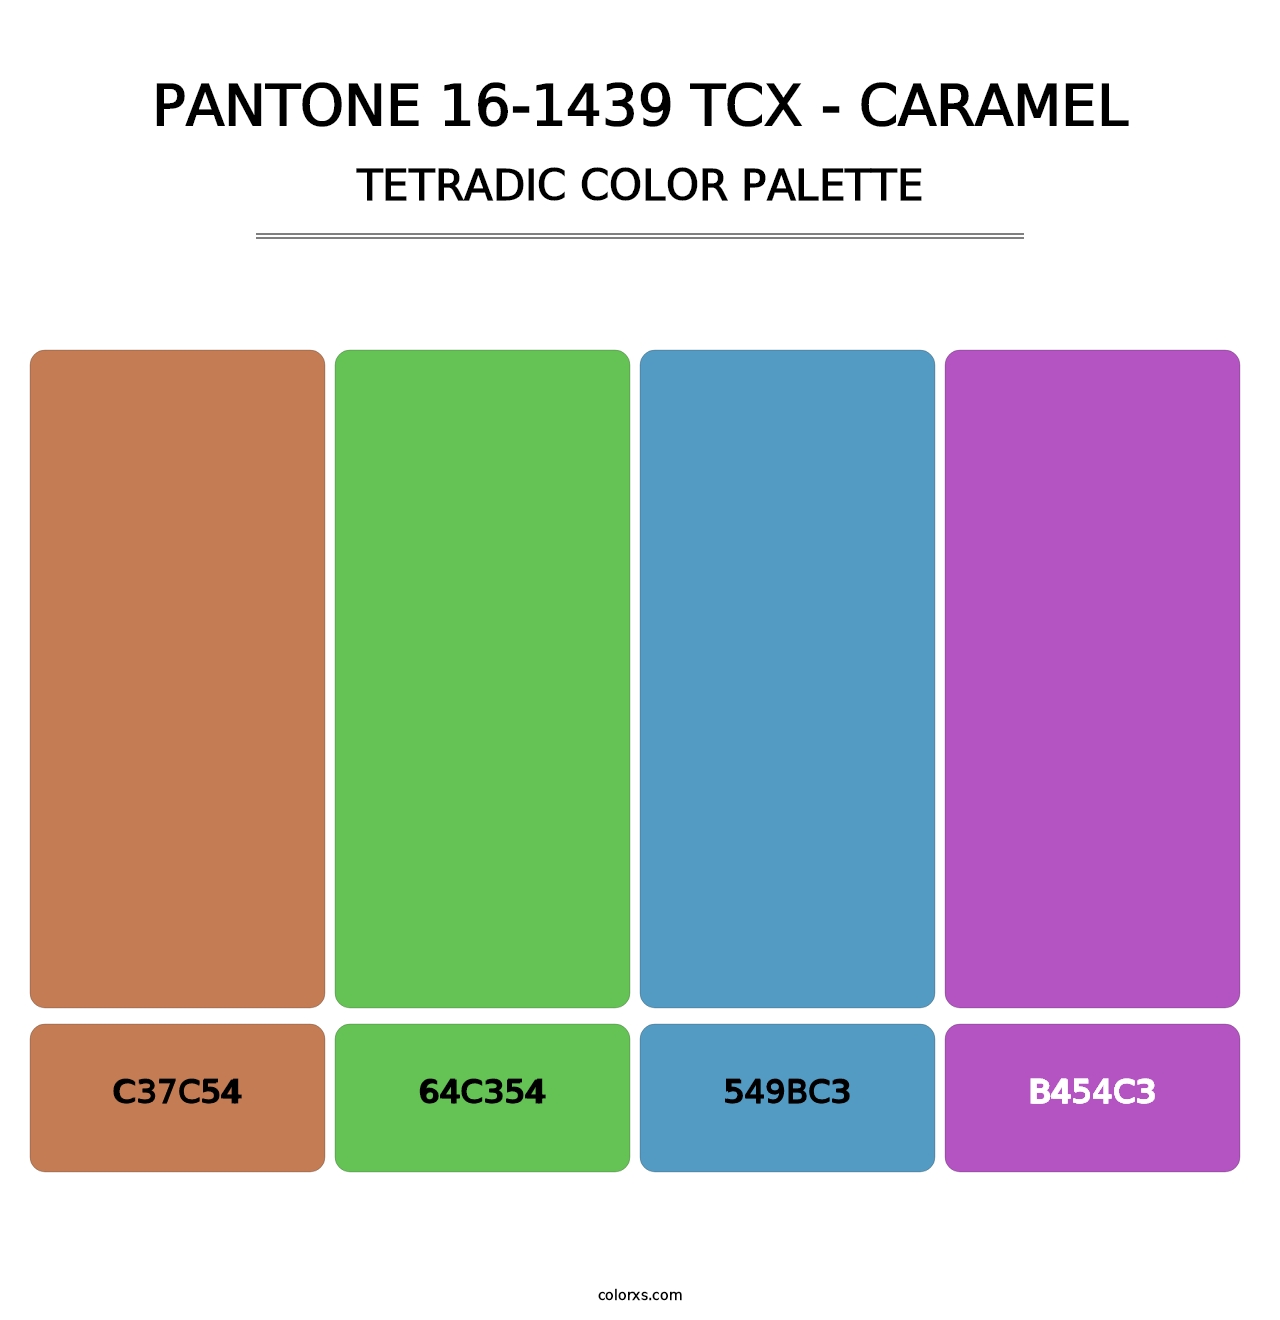 PANTONE 16-1439 TCX - Caramel - Tetradic Color Palette